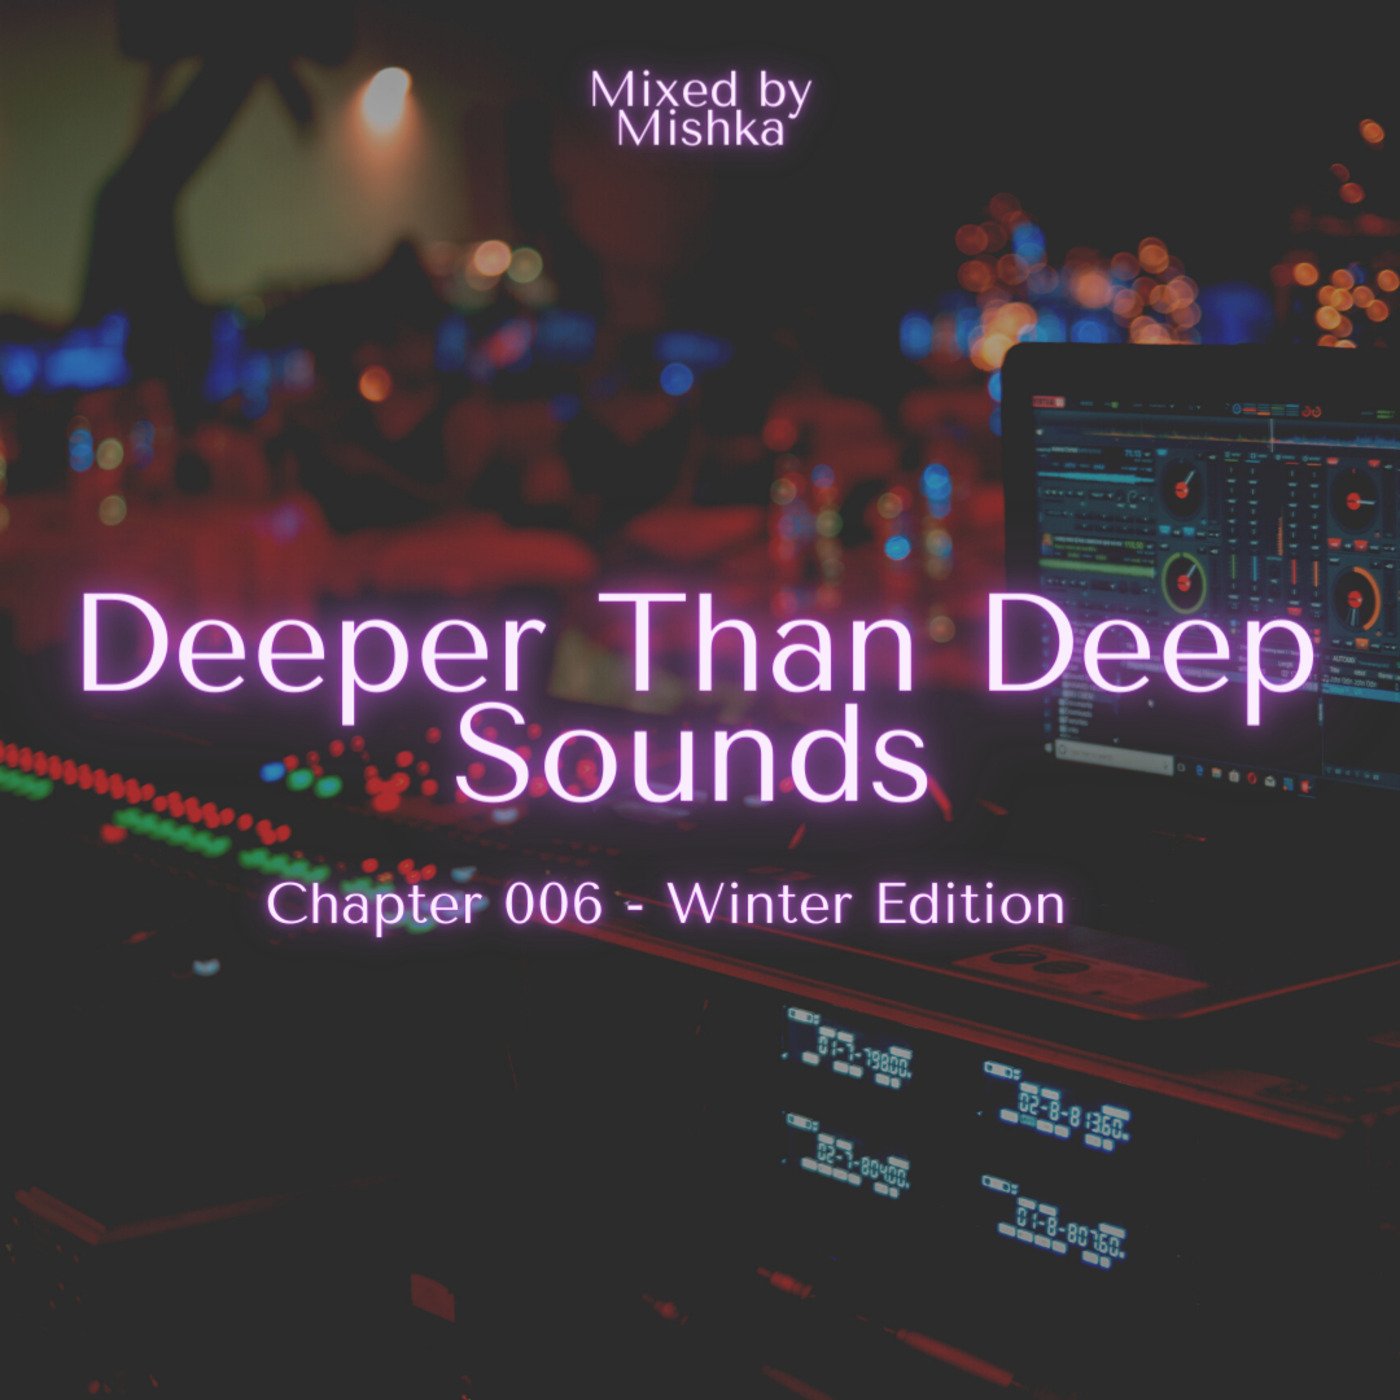 Deeper Than Deep Sounds - Capter 002 Mixed by Mishka